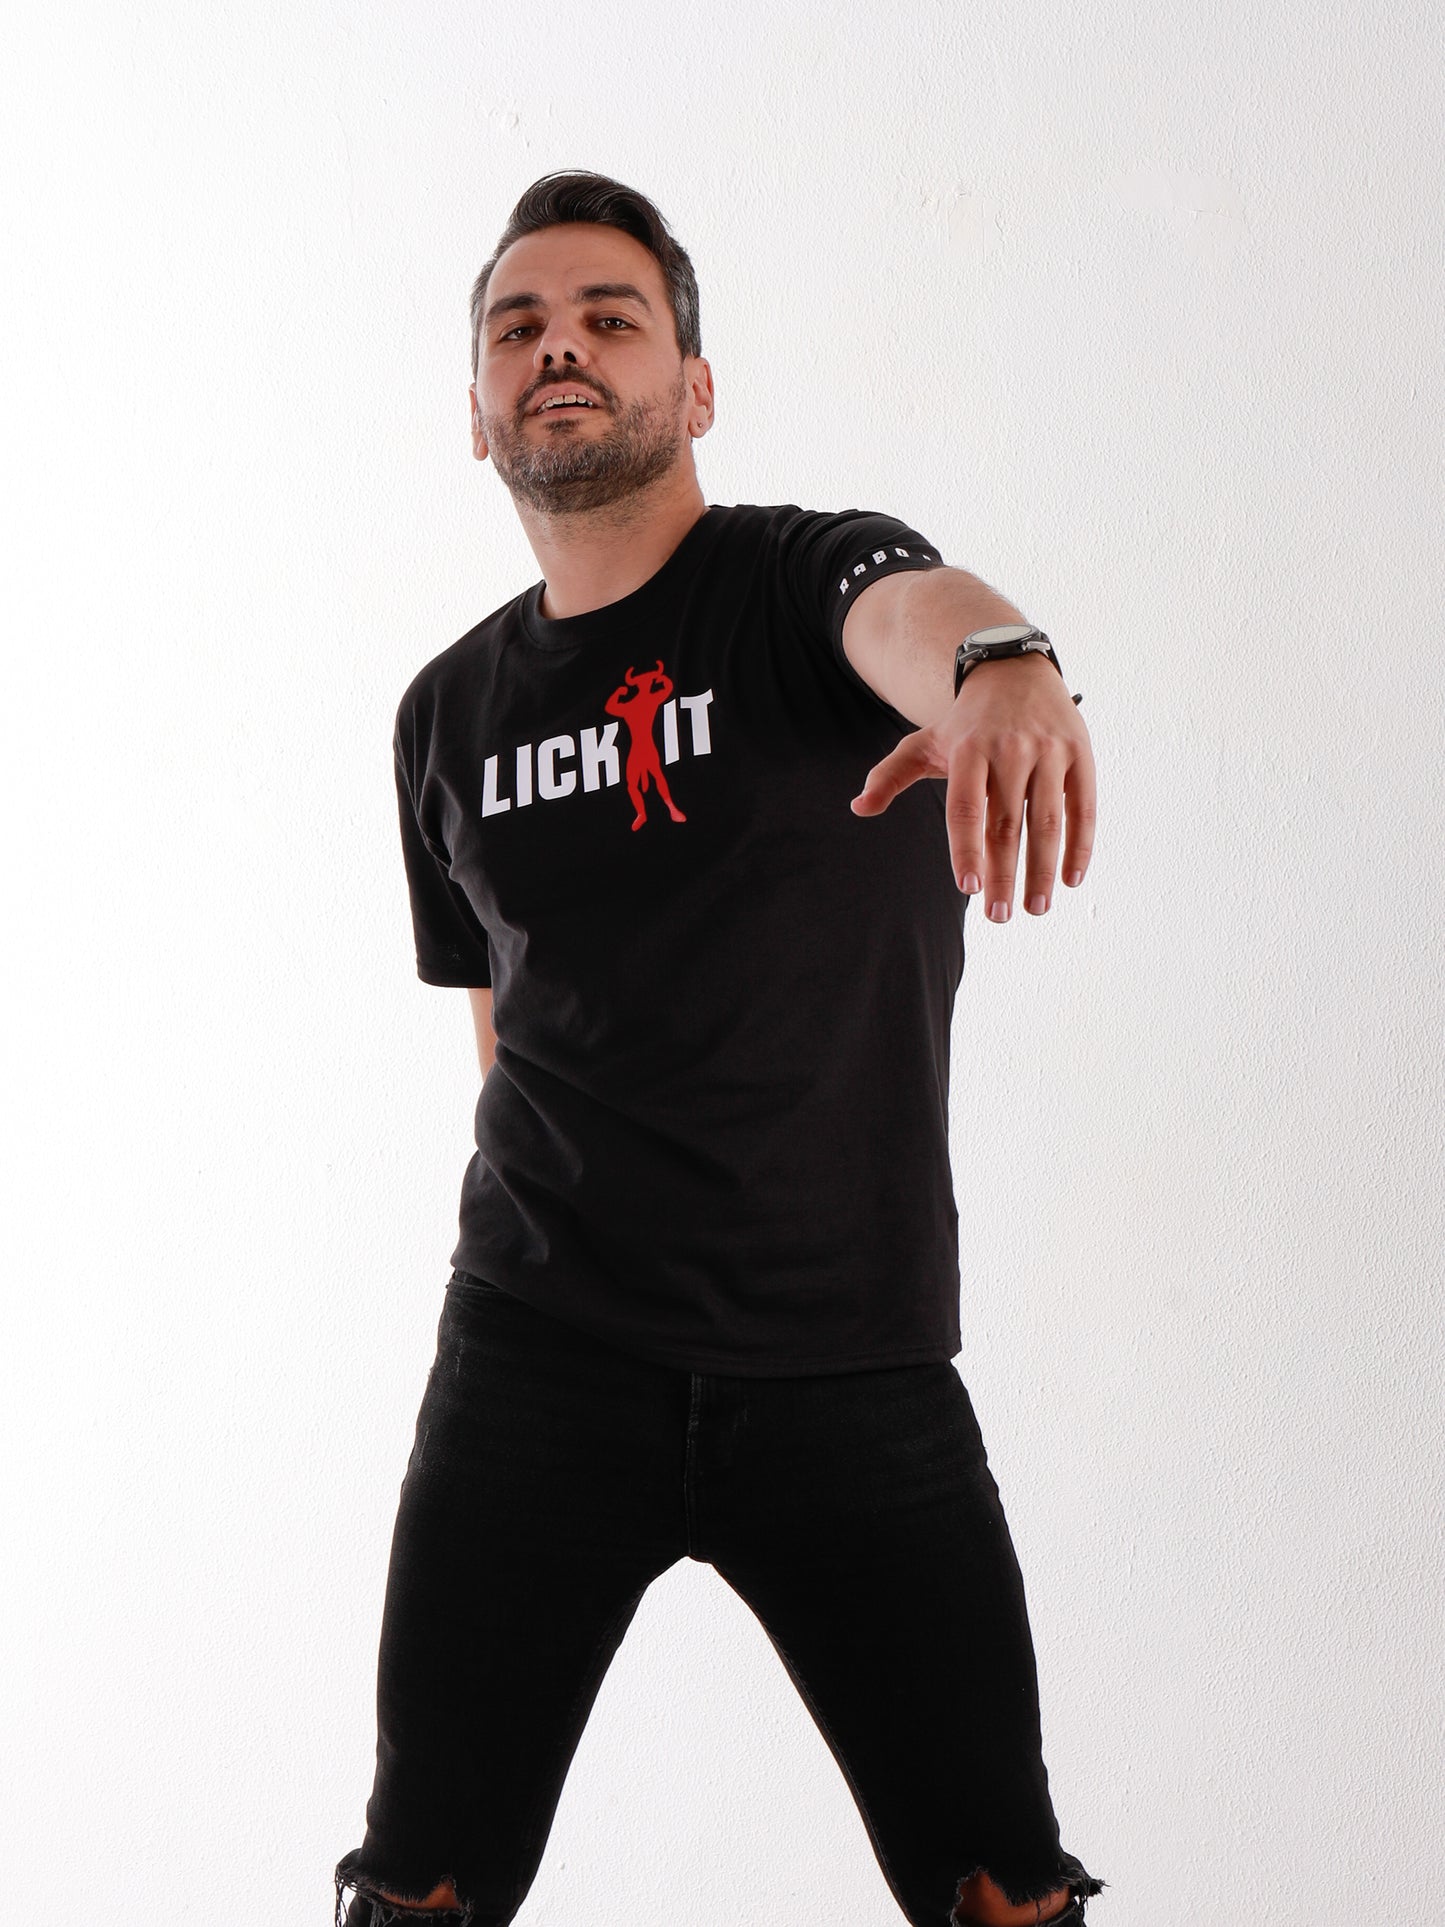 LICK IT T-Shirt with Minotaur Armpit Fetish design